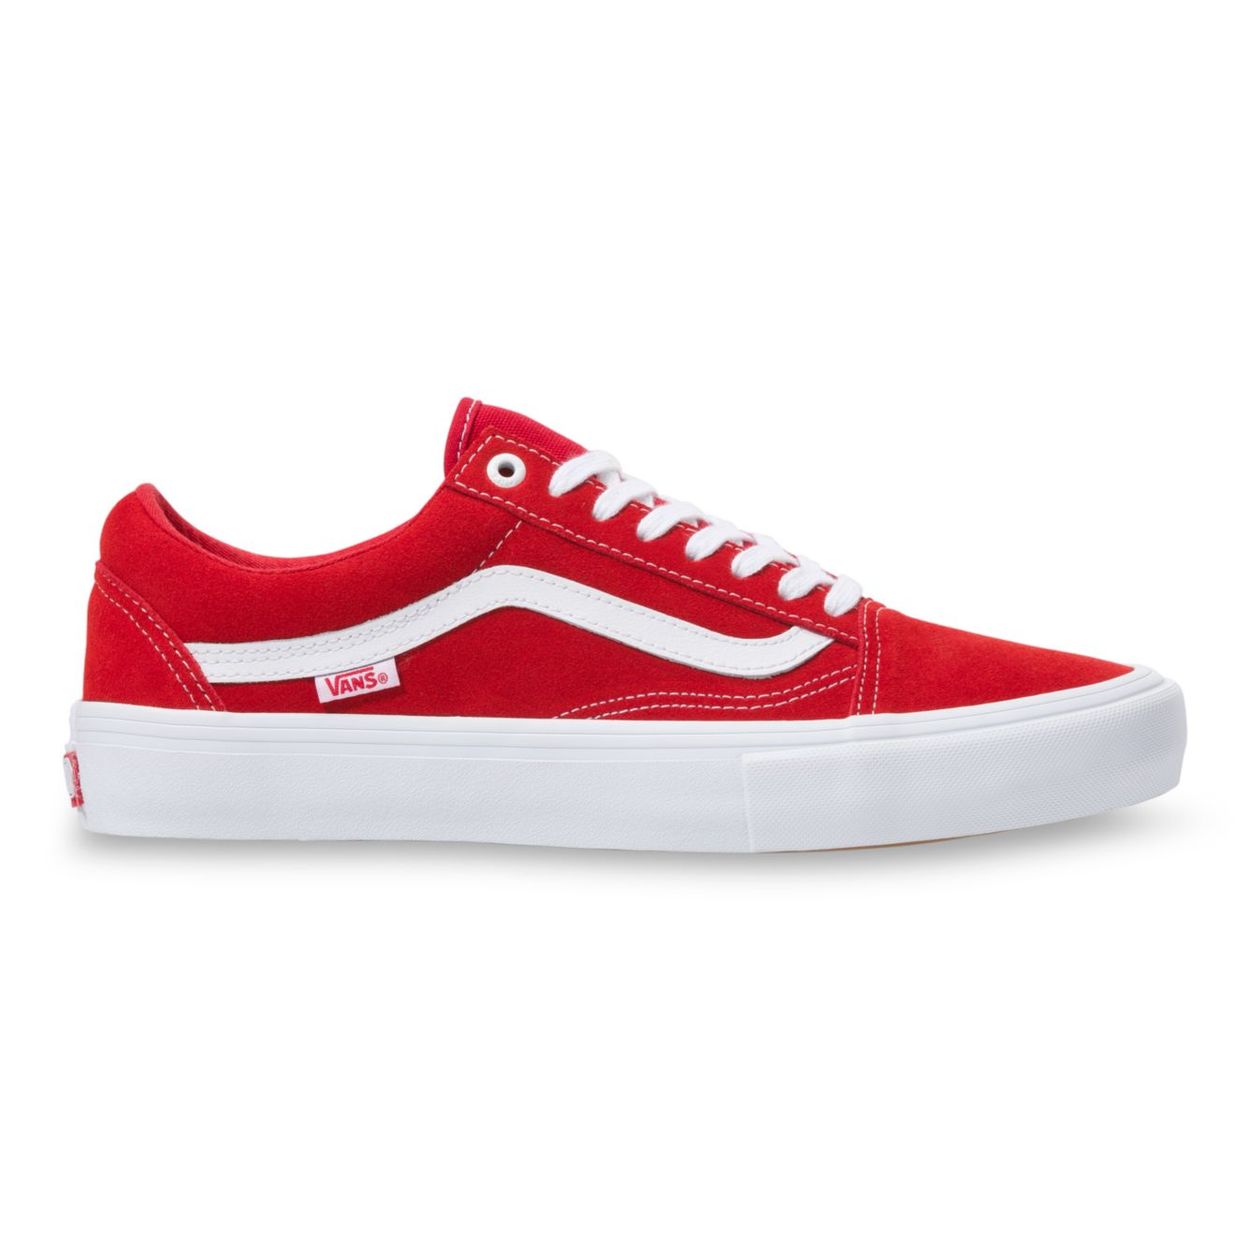 Vans Suede Old Skool Pro Skateboard shoes - Red/White